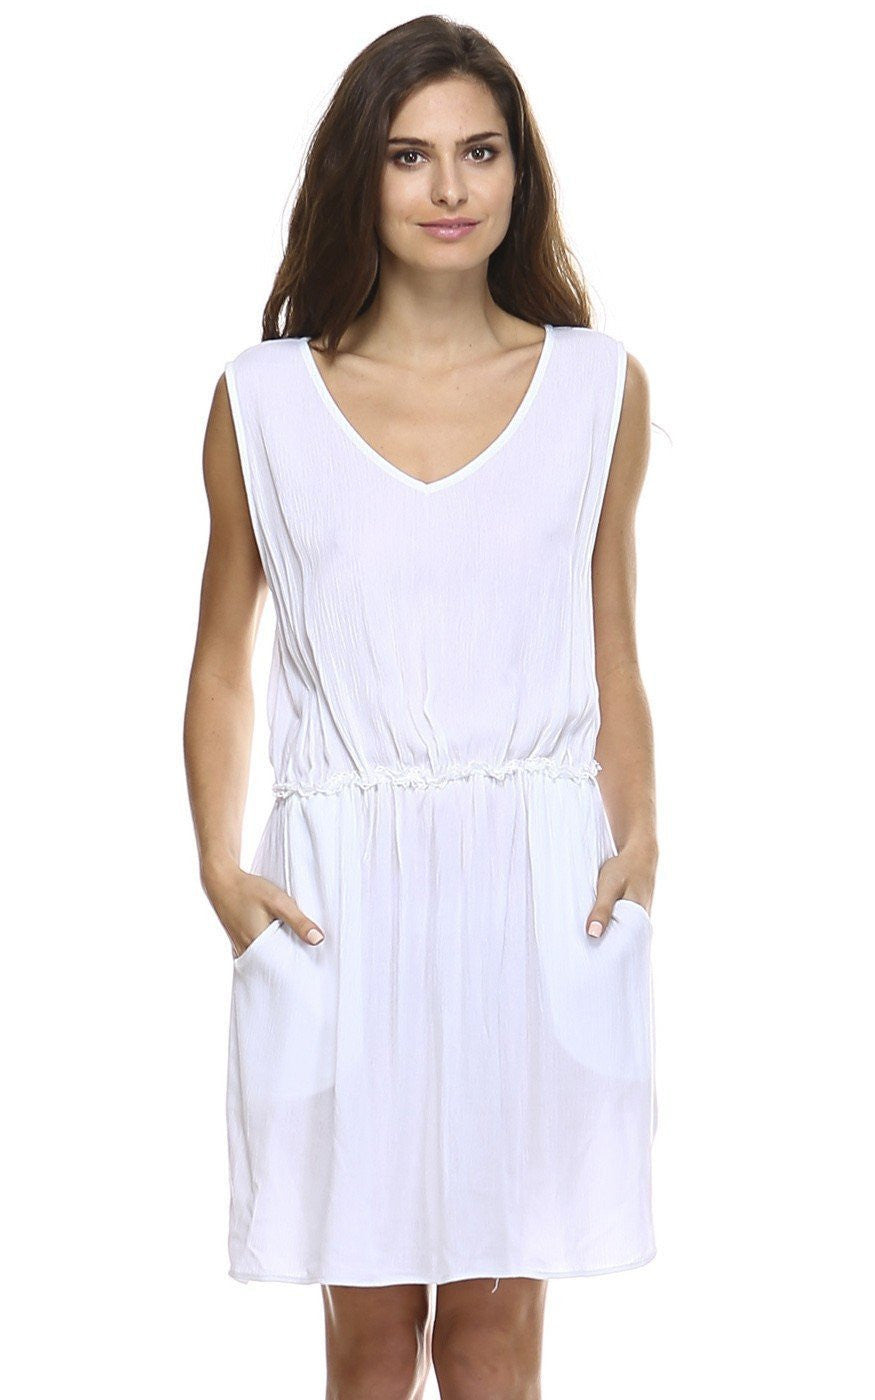 URBAN X APPAREL-Style UDRG7095-DRESSES-Wholesale-blowout sale event-Women Apparel-Fashoin Go-La showroom-Orange Shine